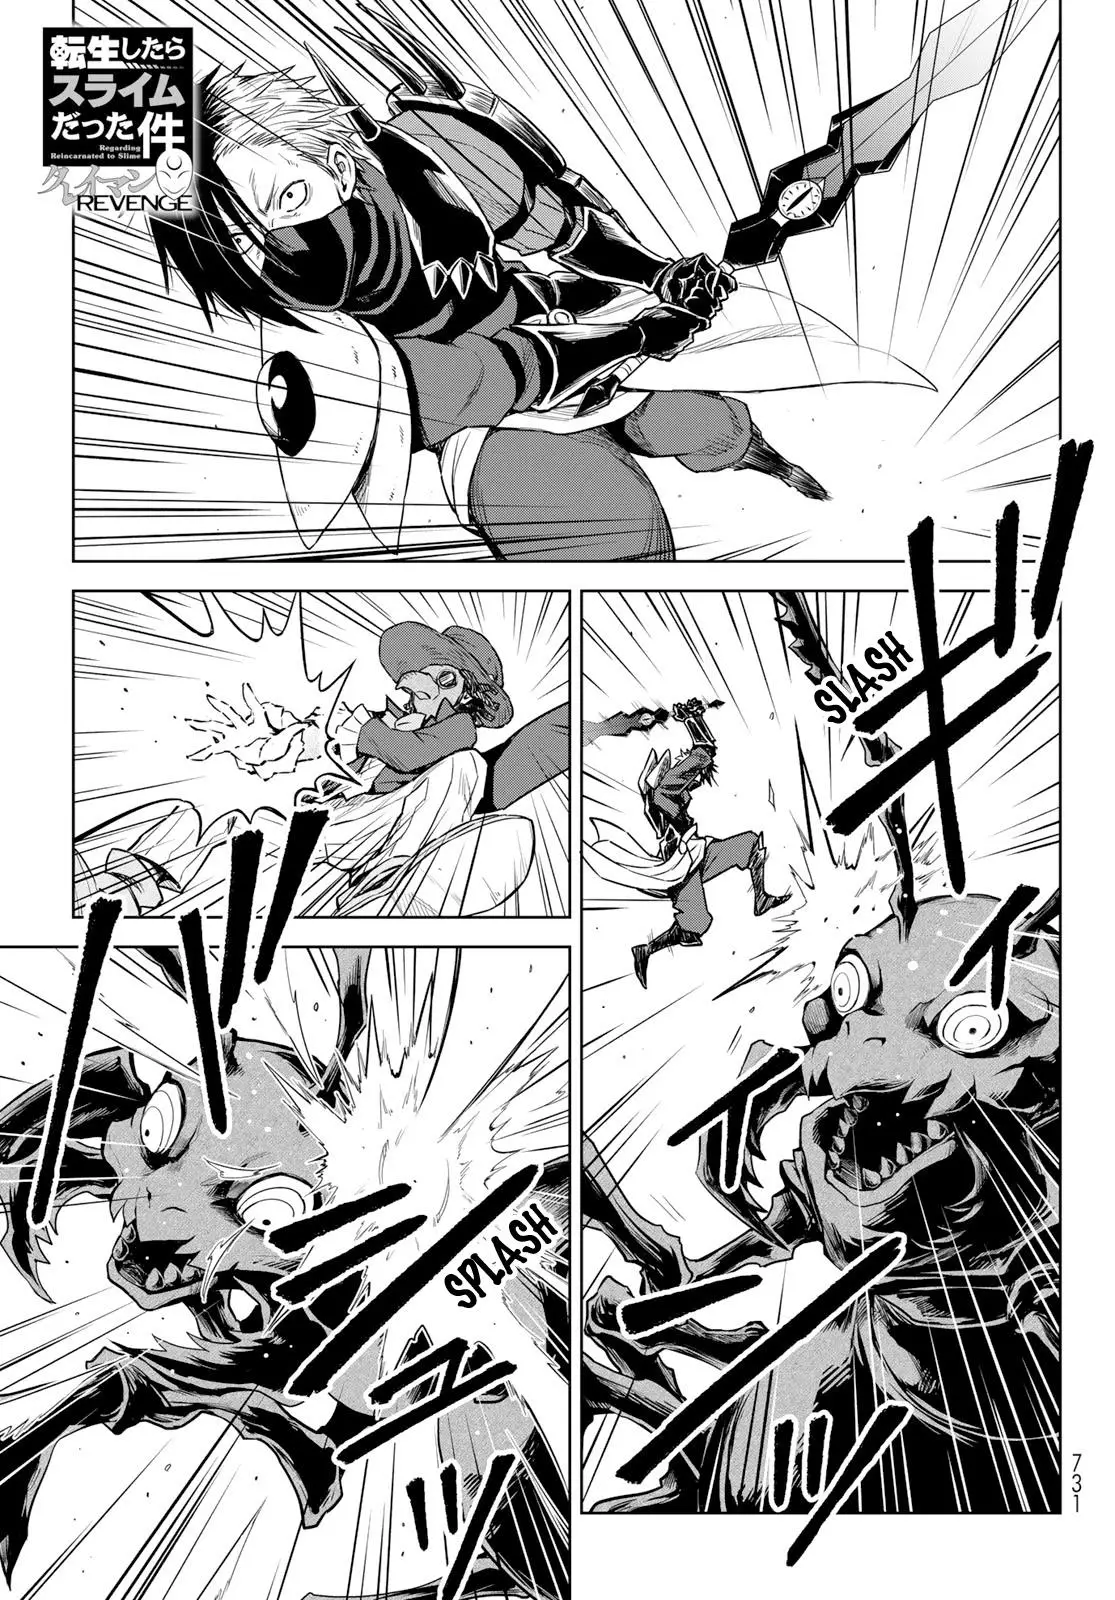 Tensei Shitara Slime Datta Ken: Clayman Revenge - 14 page 1-1fbba9de